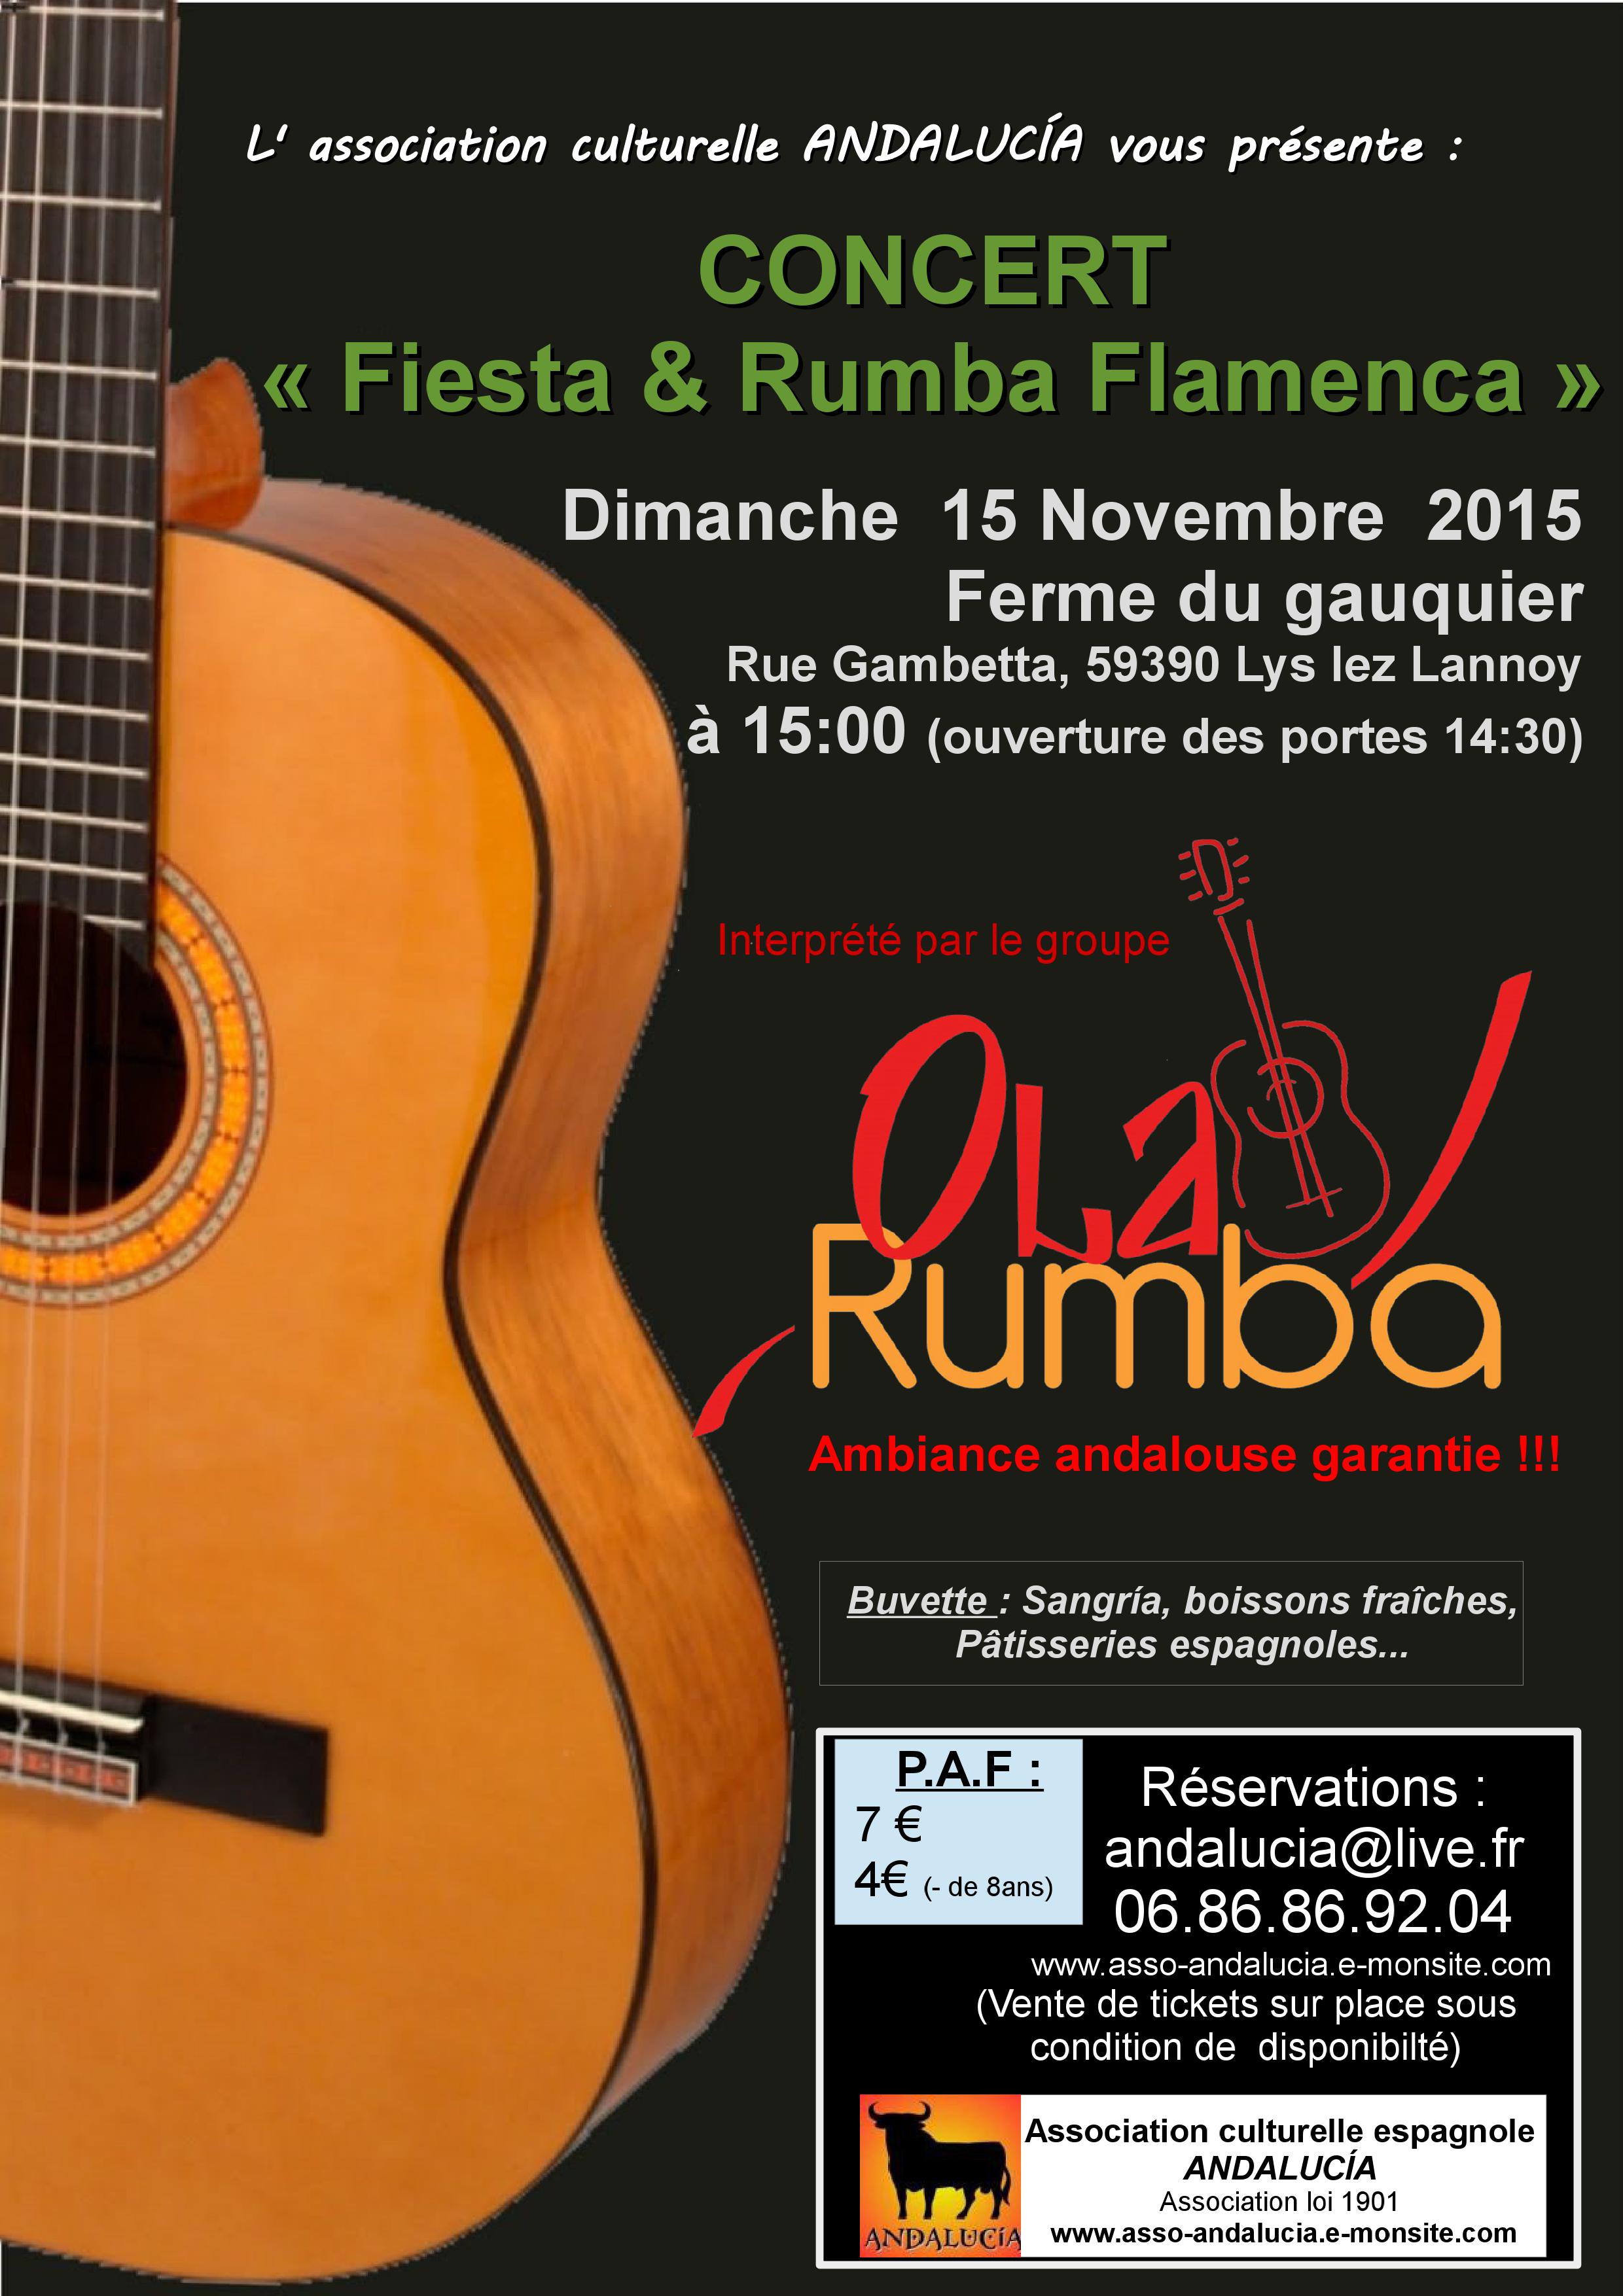 Fiesta y rumba flamenca